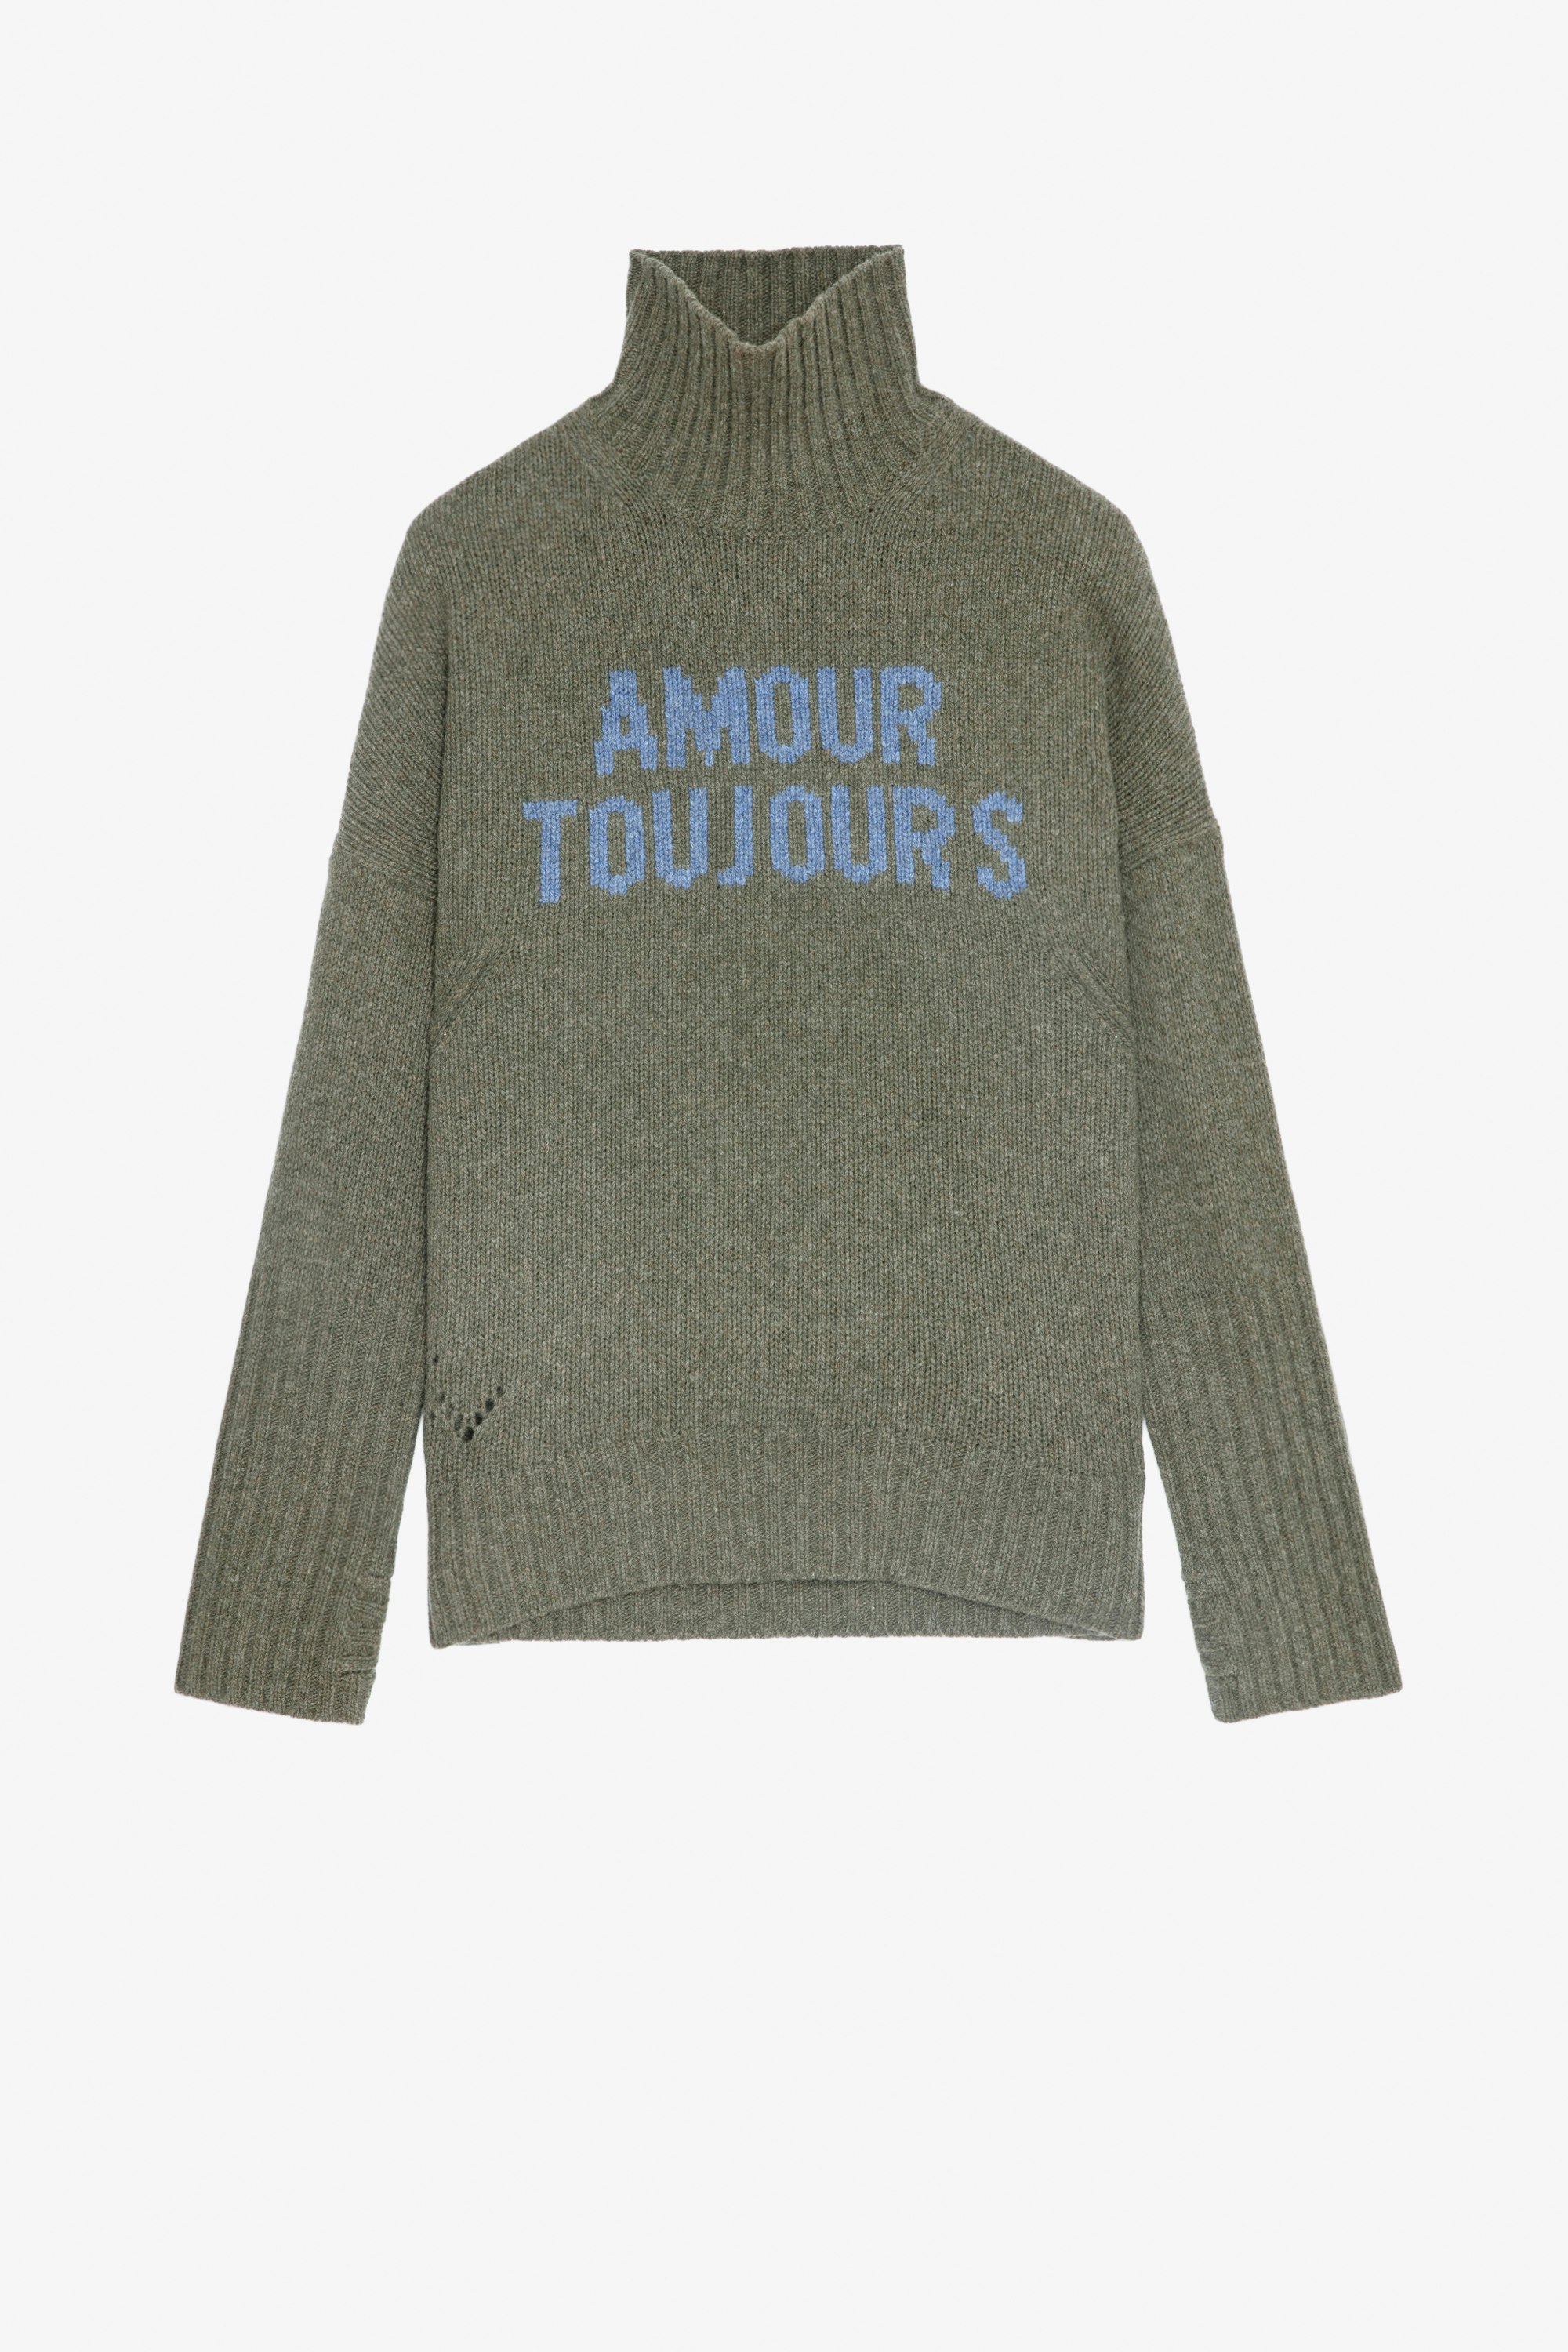 Alma Sweater Women’s high-necked khaki merino wool sweater featuring “Amour Toujours” slogan